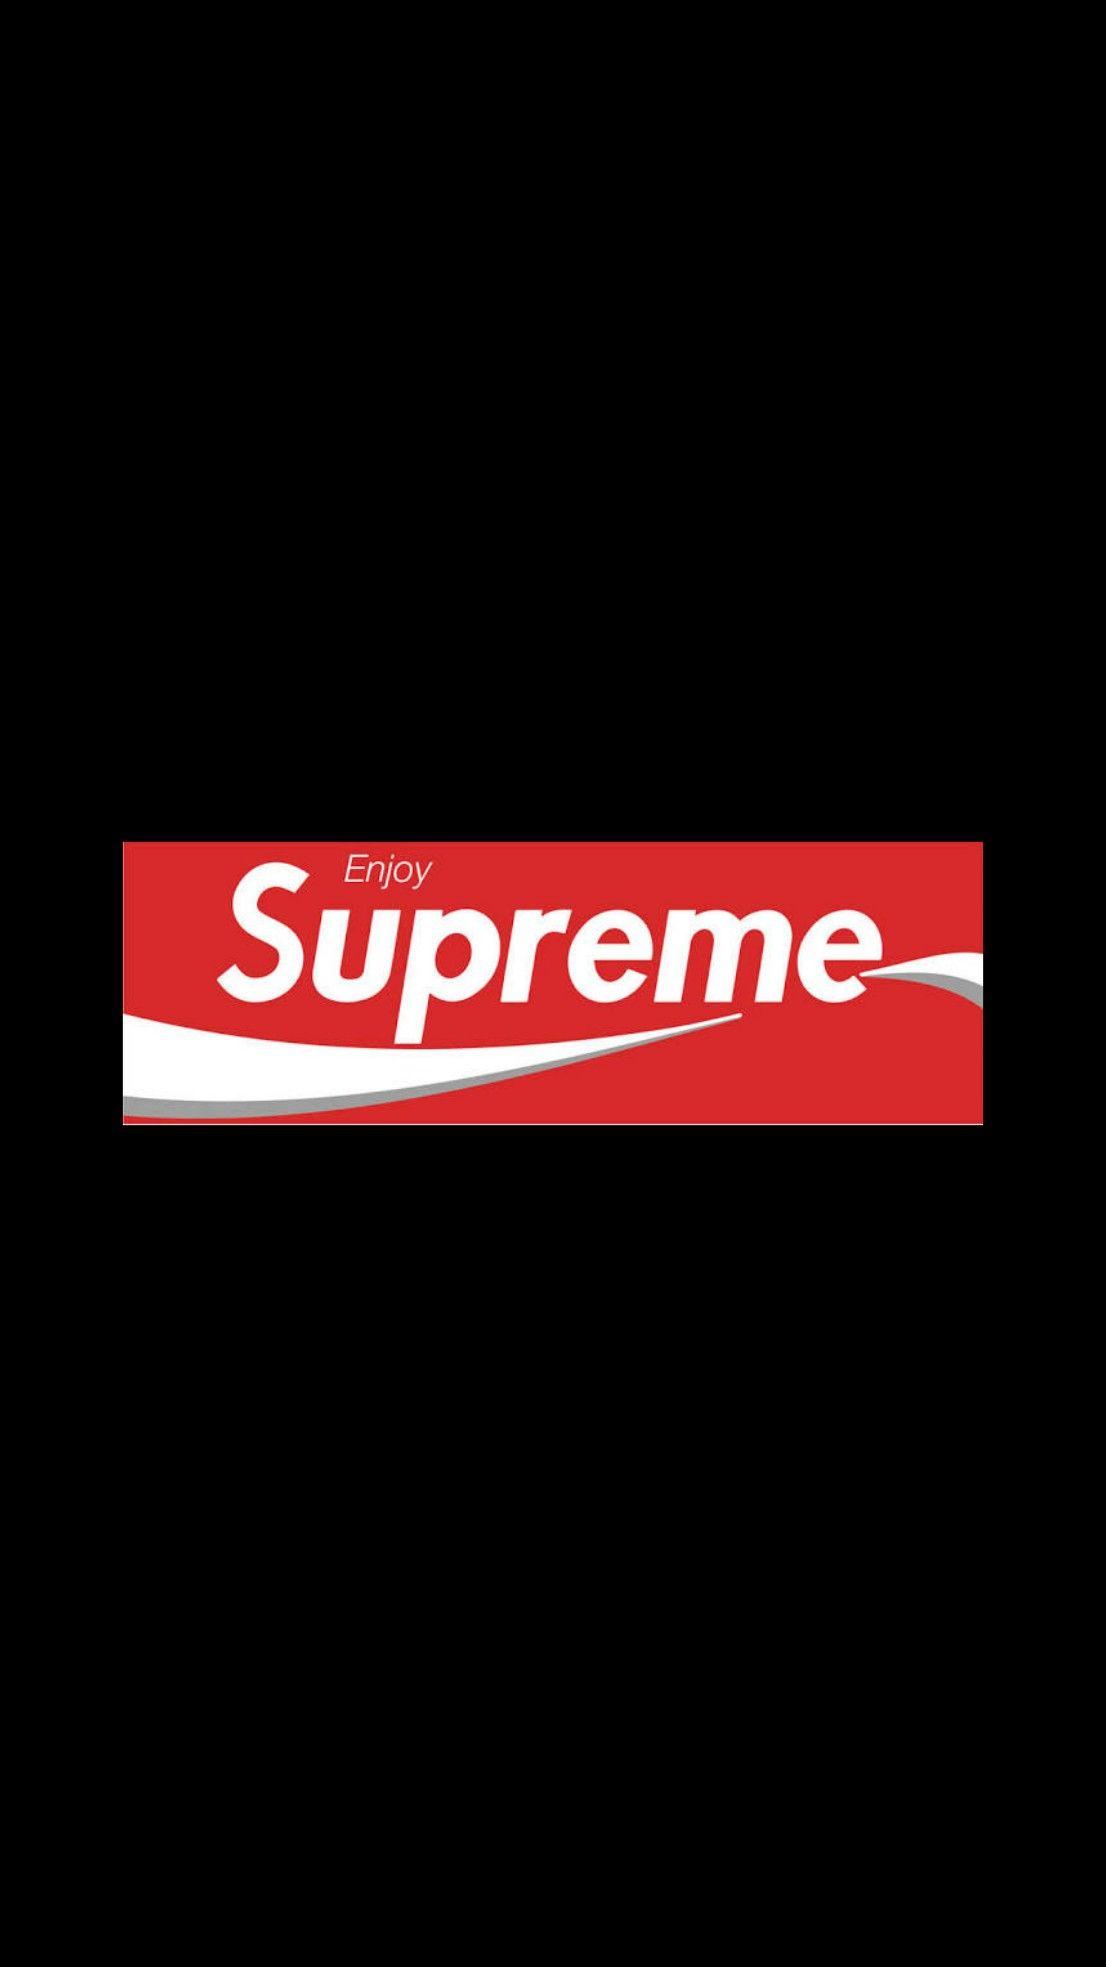 Cool Supreme Logo - LiftedMiles #SupremeWallpaper XIST | CreatedResearch | Pinterest ...